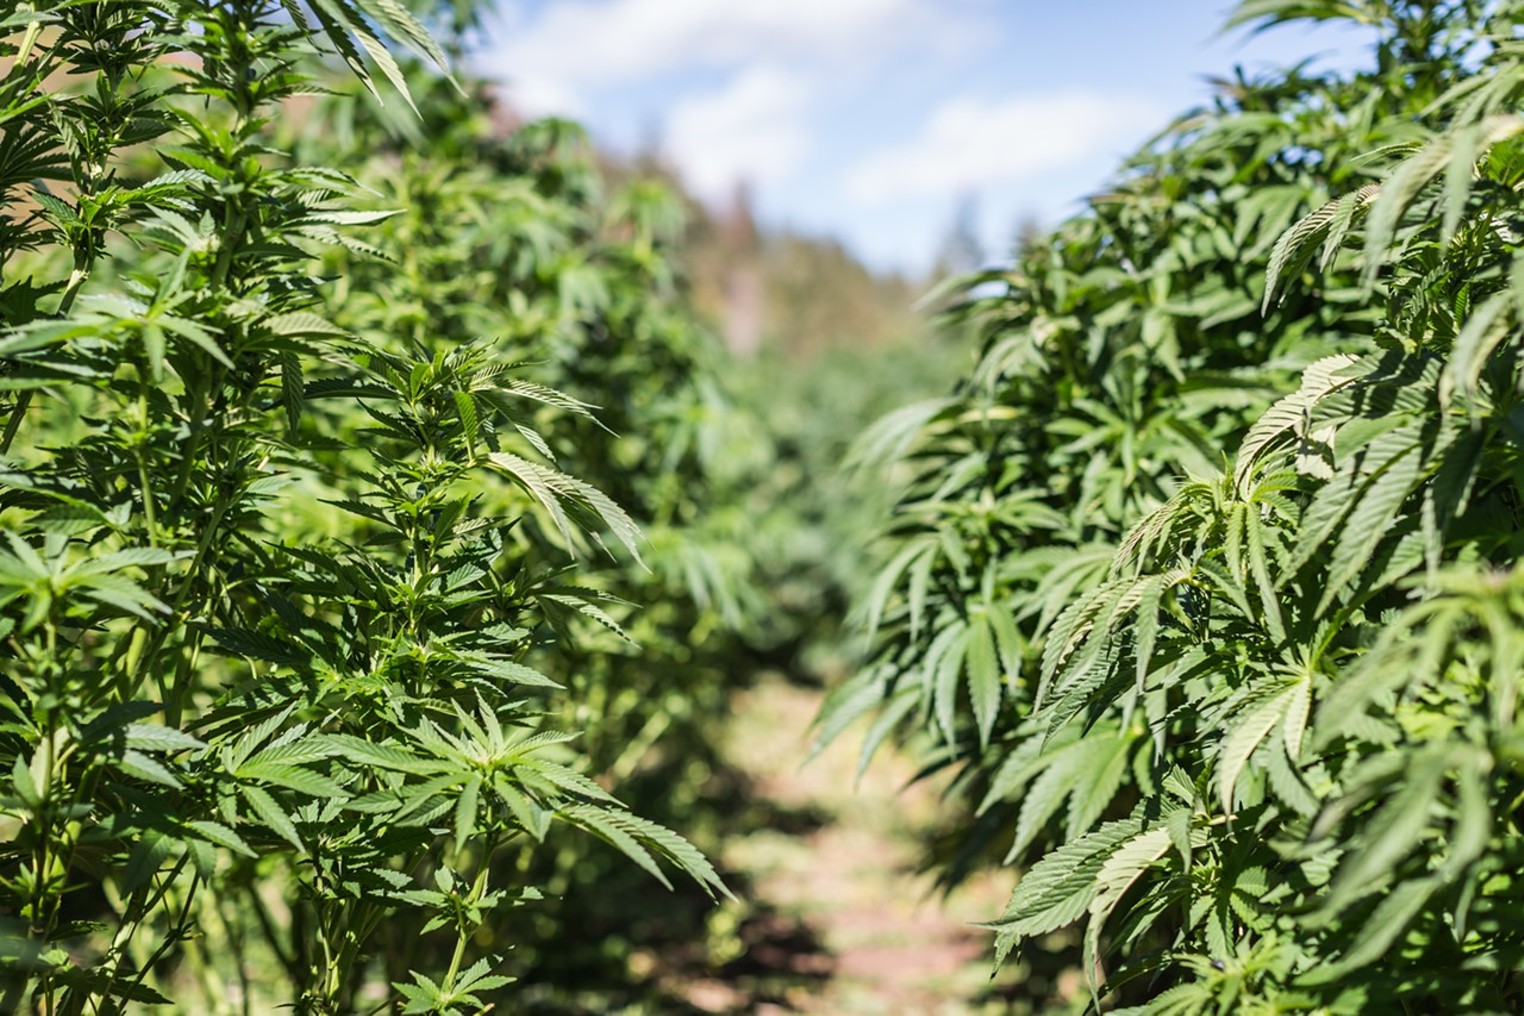 southern-colorado-marijuana-farms-have-new-ownership-westword